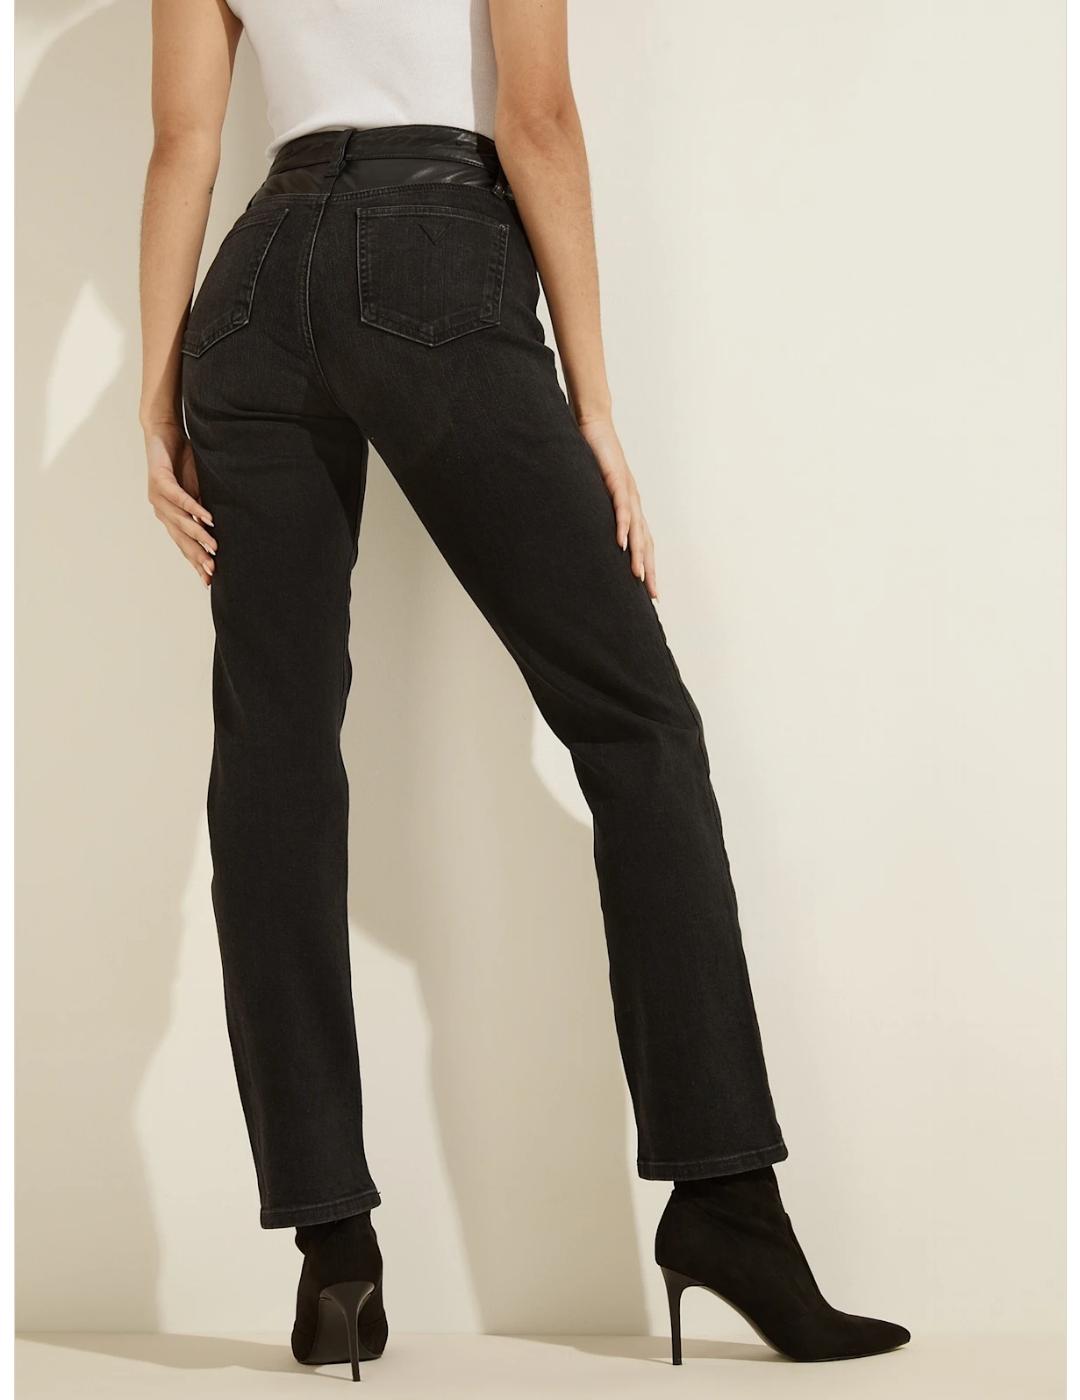 Jeans Guess cintura contraste negro para mujer